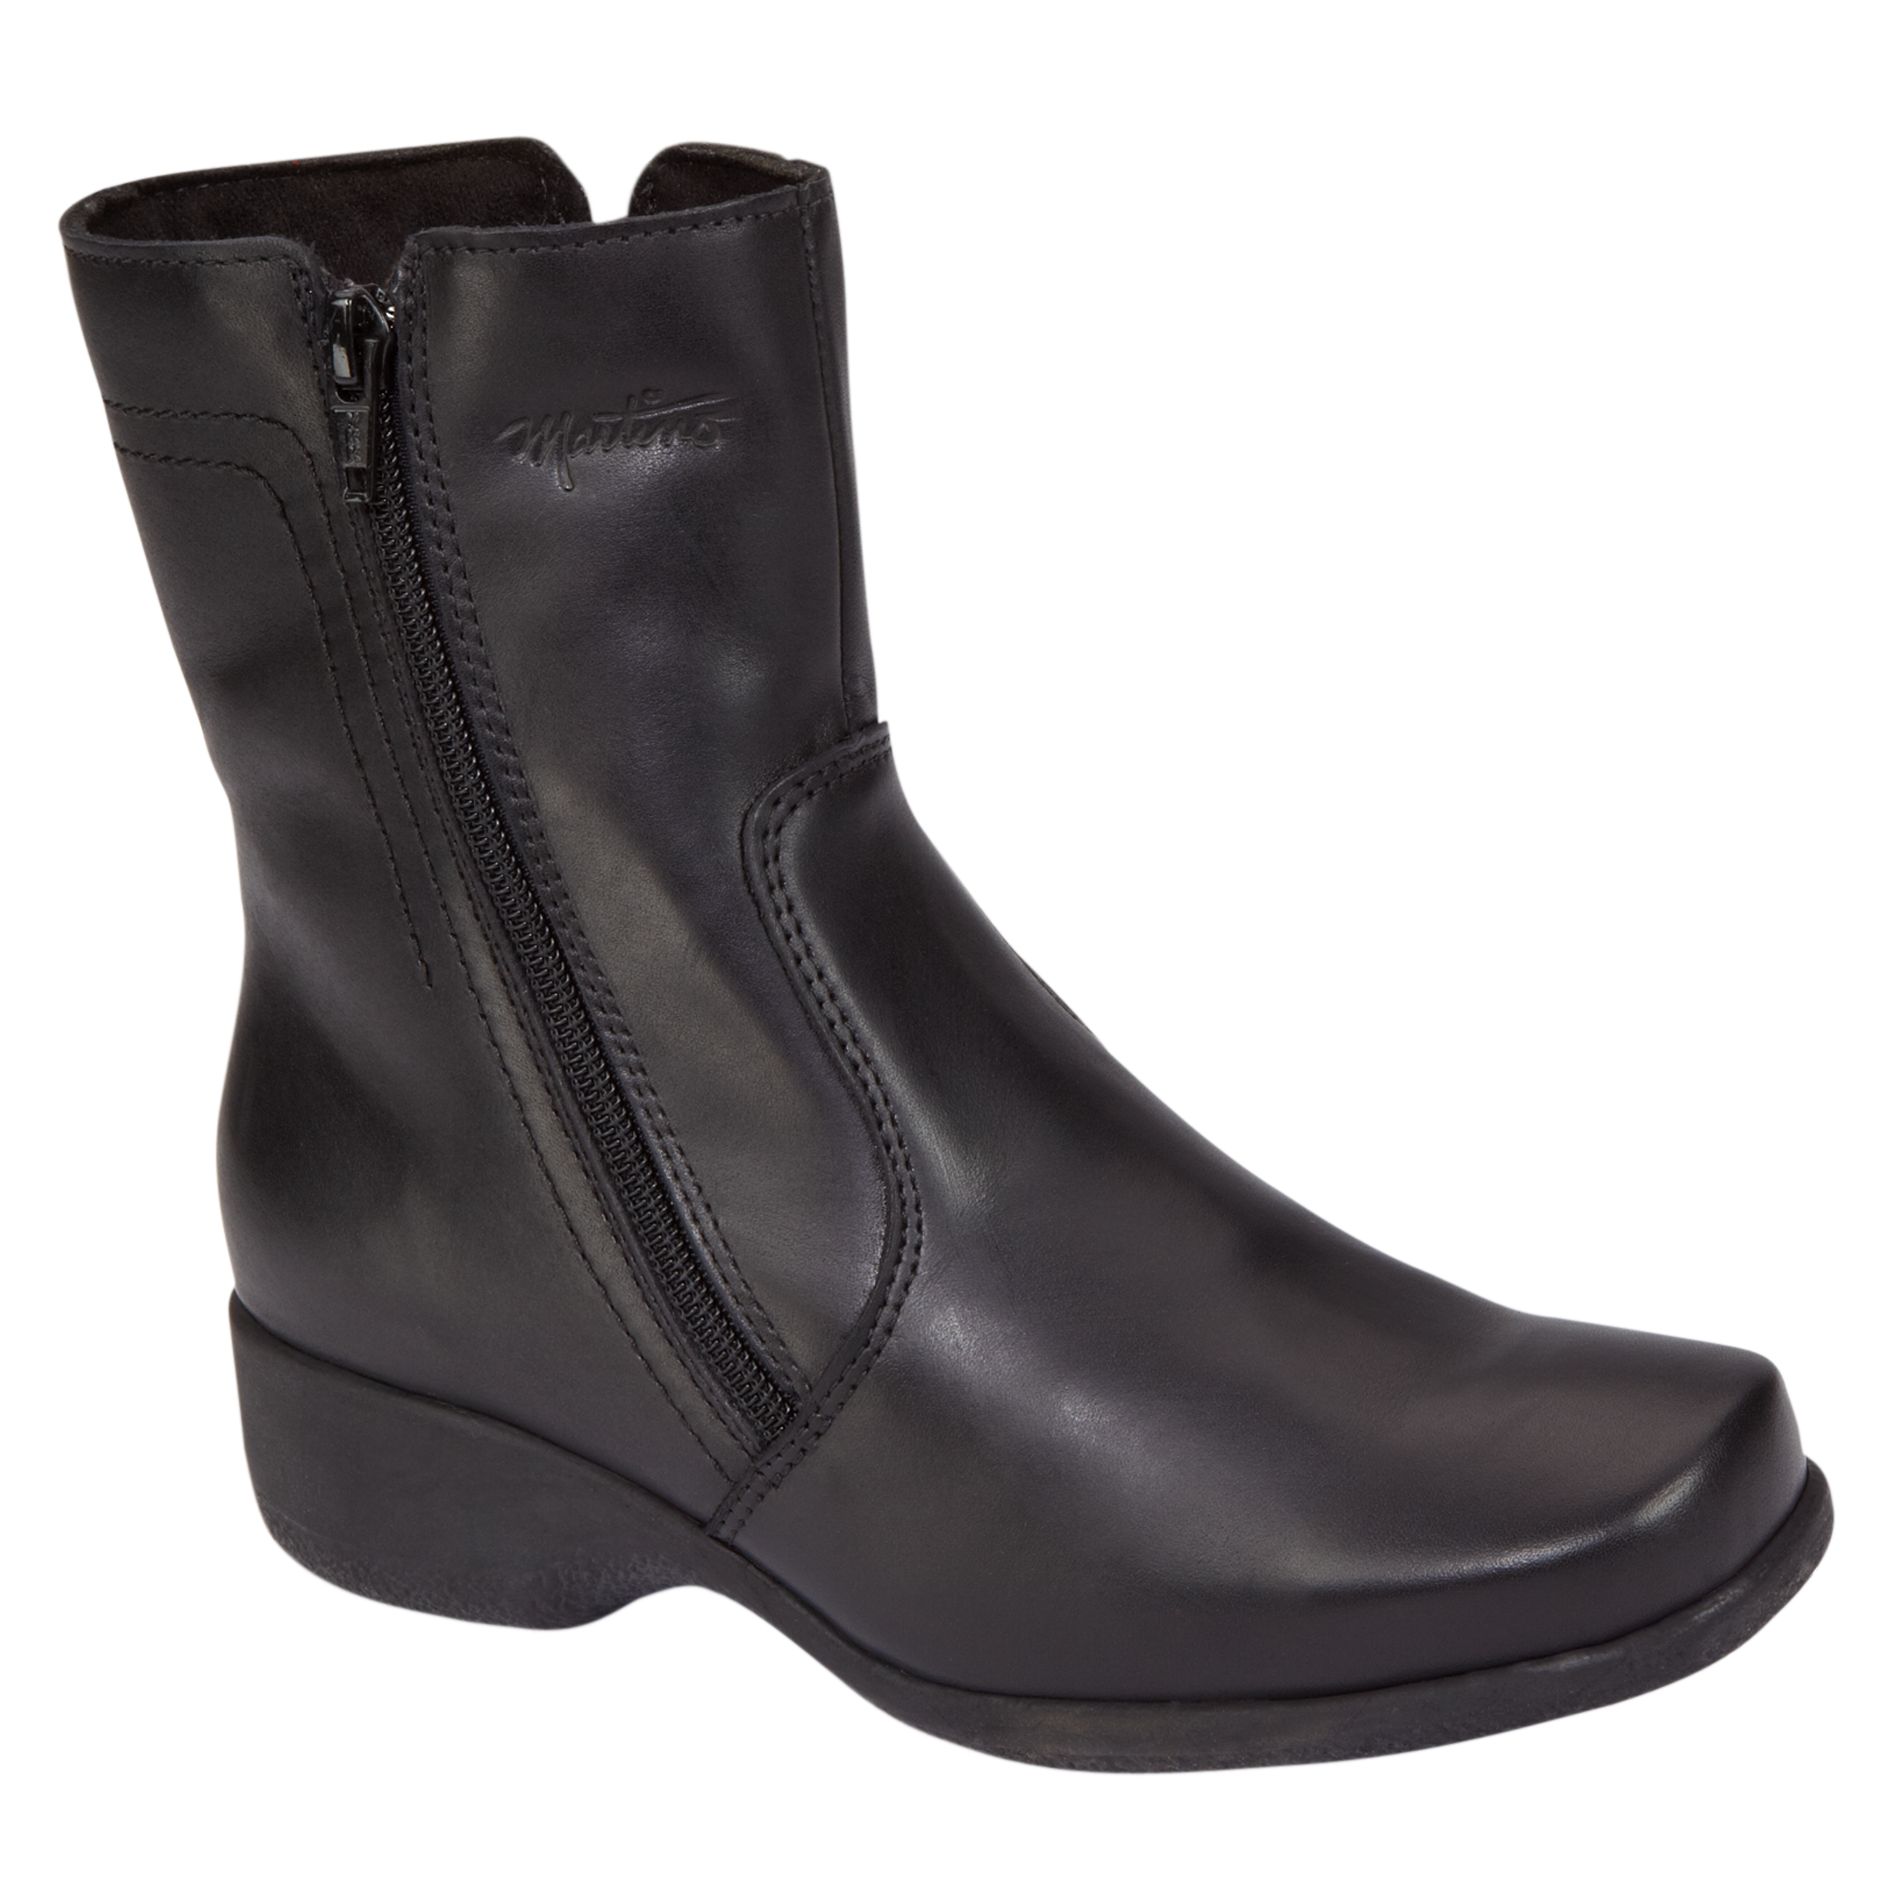 Martino Women's Lindsay Waterproof Leather Wide Width Boot - Black